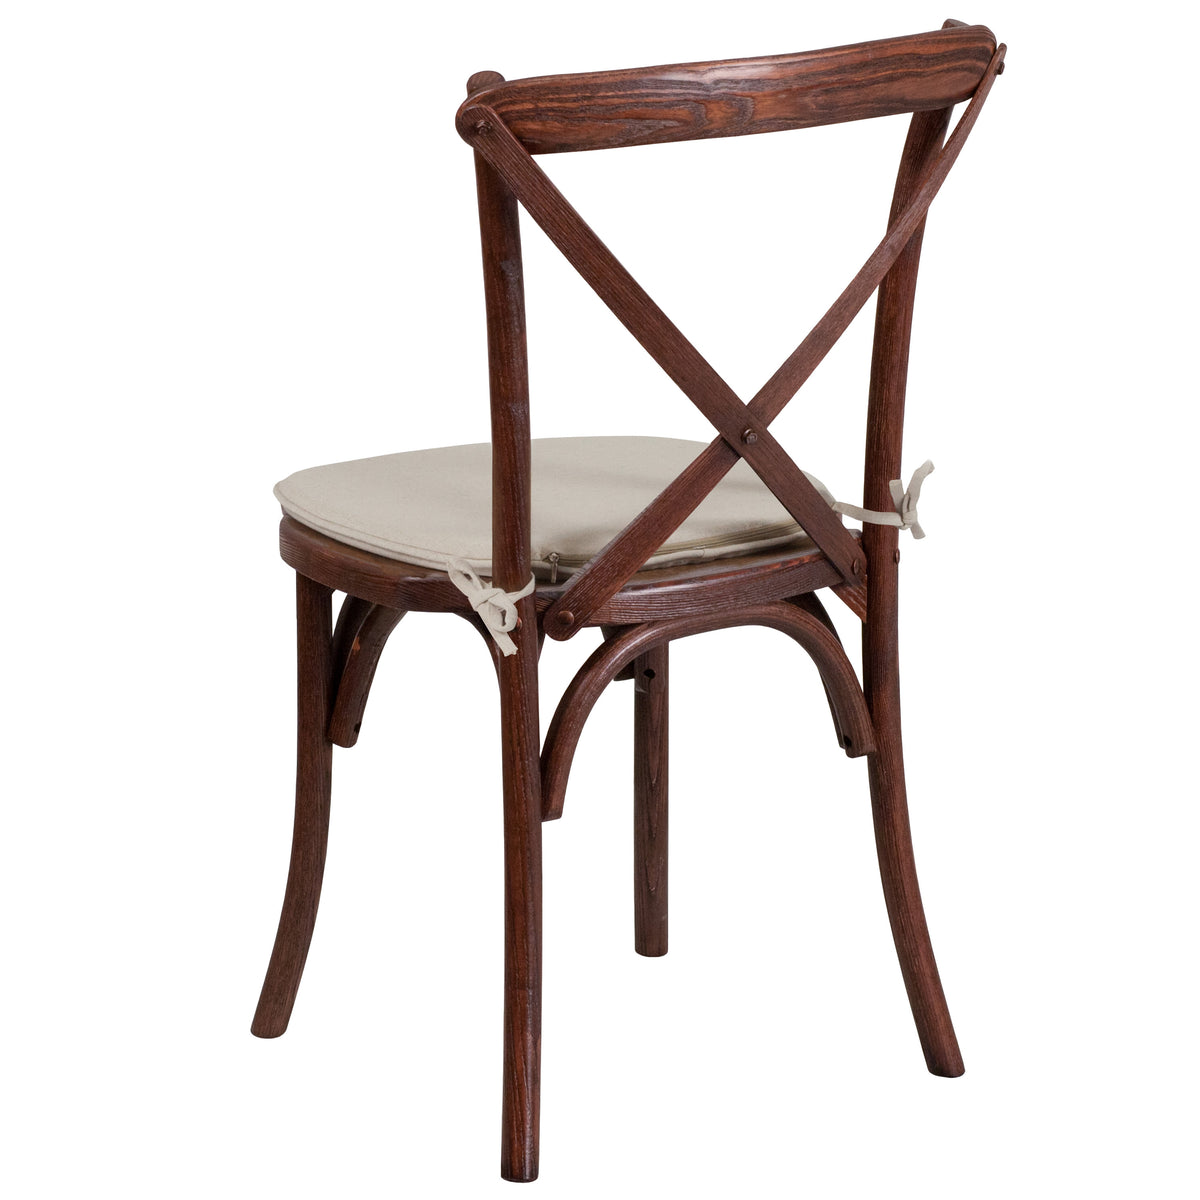 Mahogany |#| Stackable Mahogany Wood Cross Back Chair with Cushion - Dining Room Seating